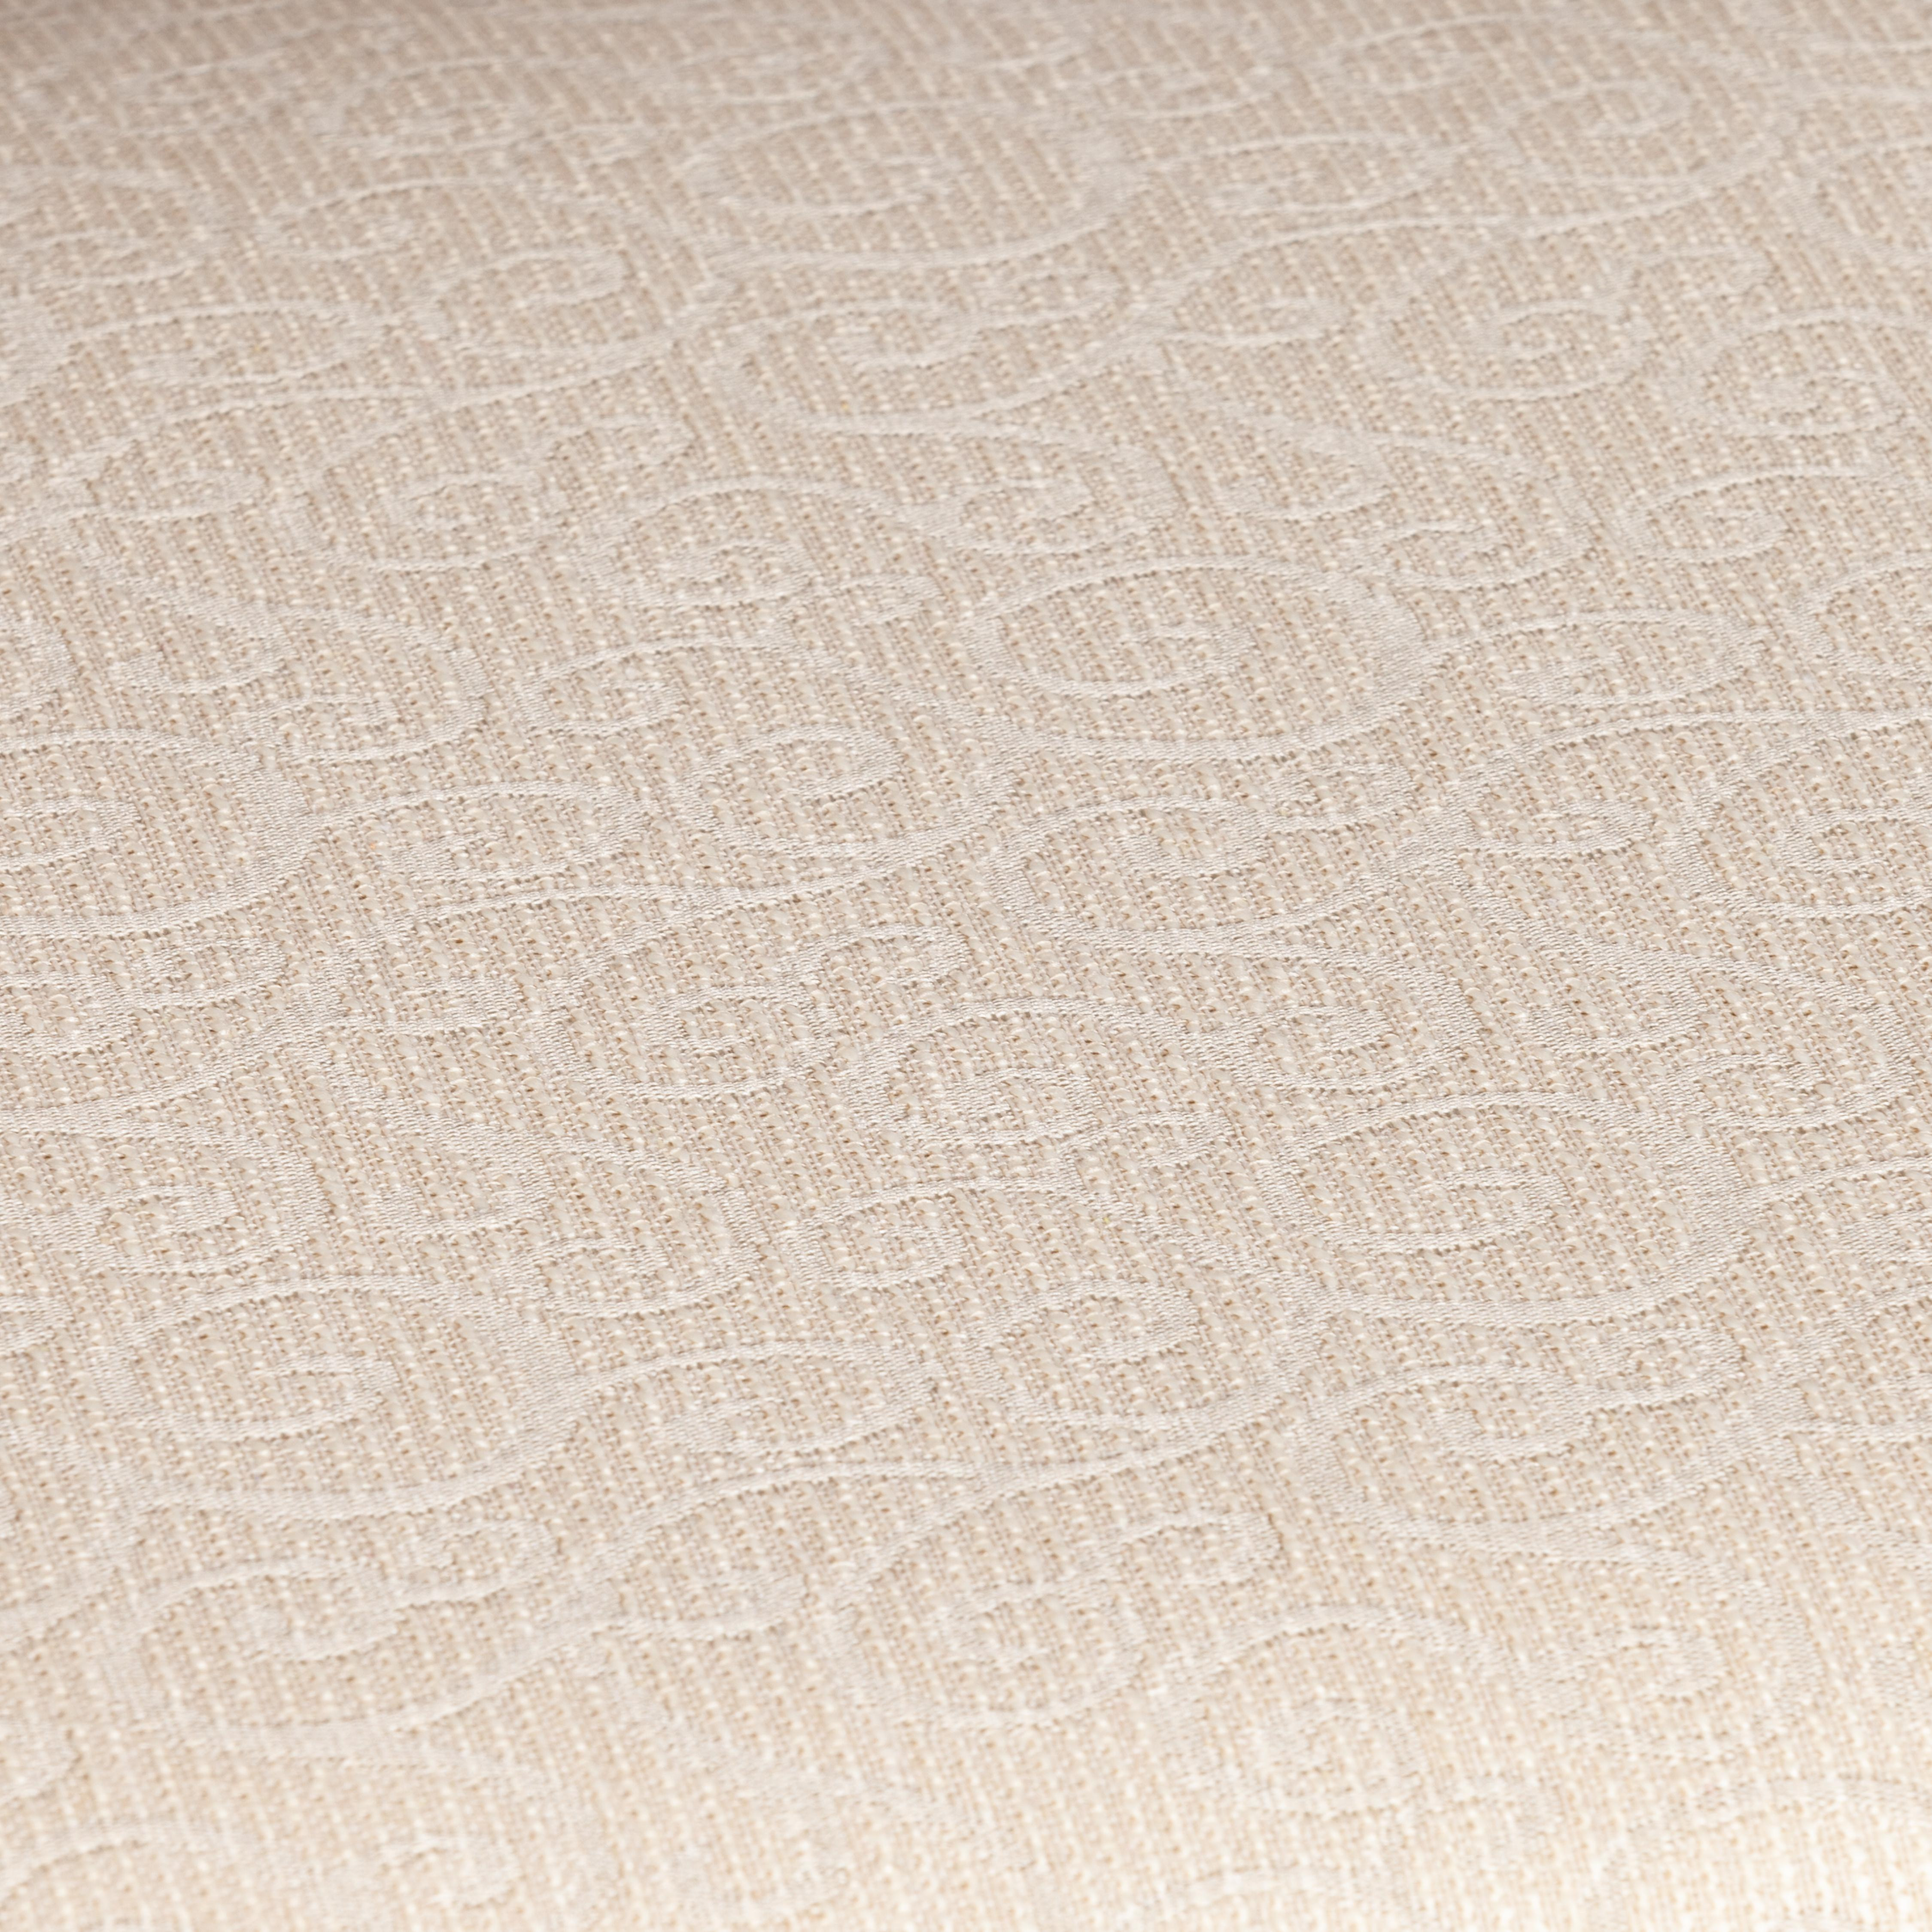 Стул - Афродита/ Aphrodite дерево гевея, 46х54х99см, Ivory white, ткань кремовая с рисунком (А04)